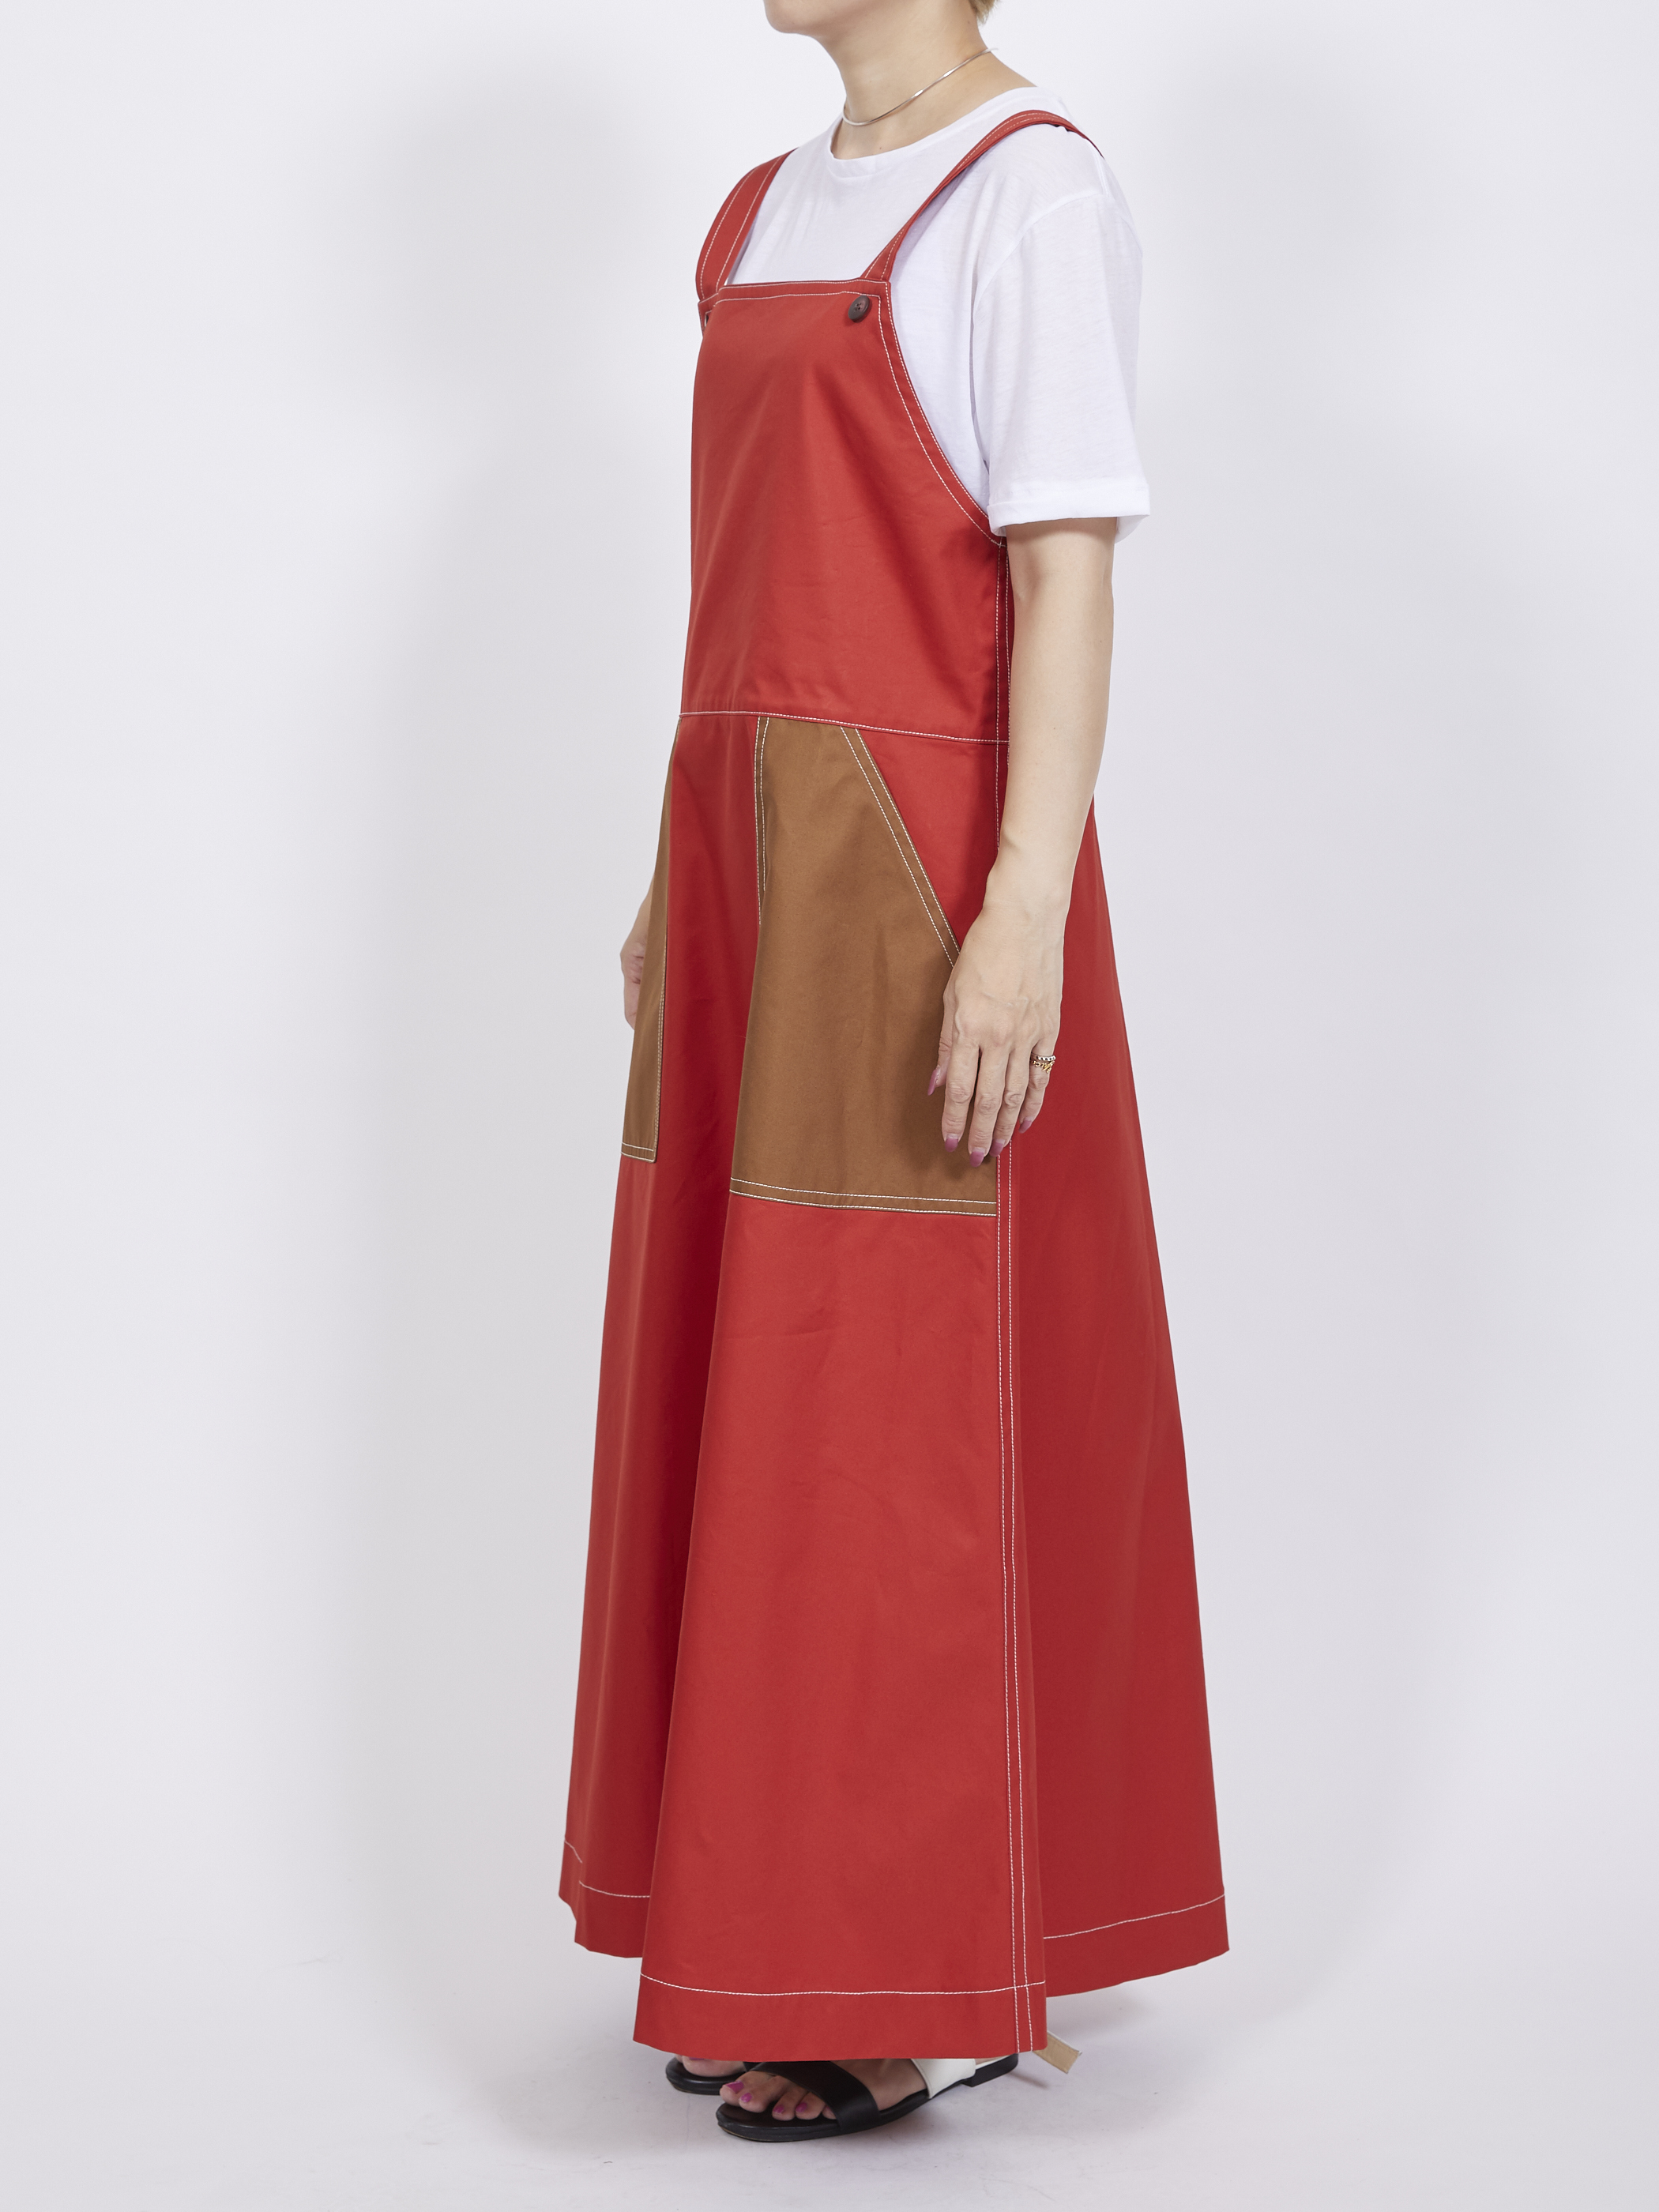 bicolored jumper skirt・ORANGE×BROWN - my panda online shop